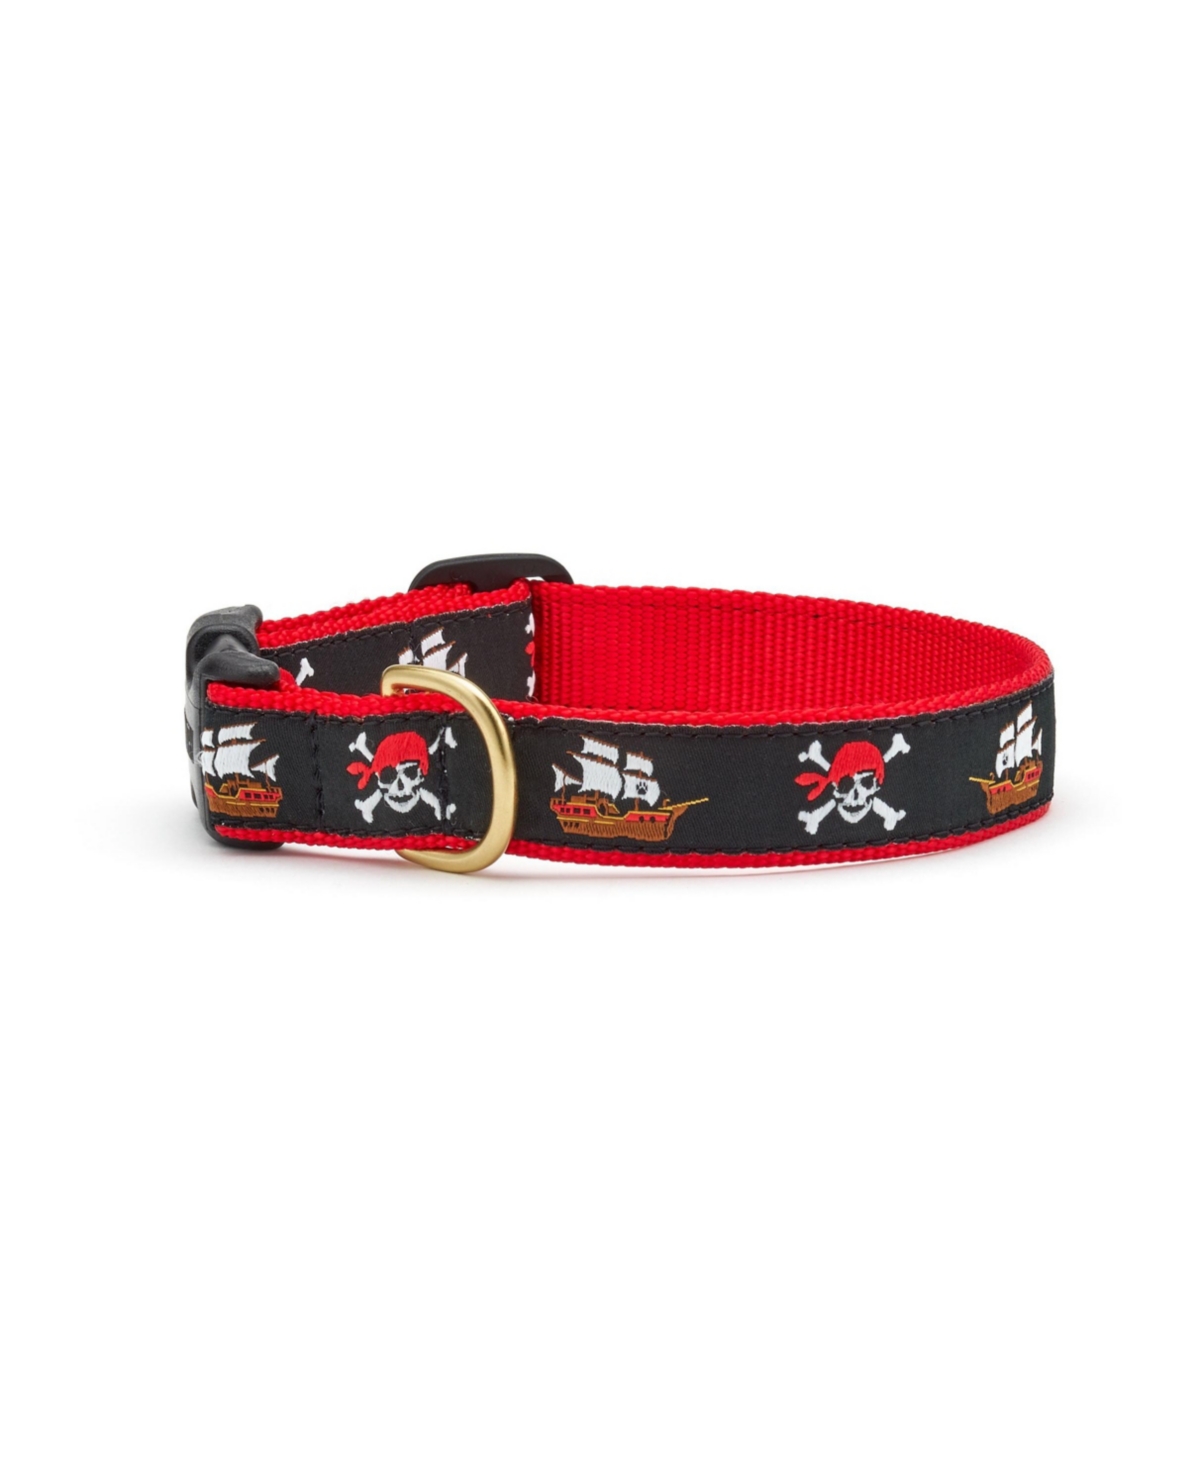 Pirate Dog Collar - Multi